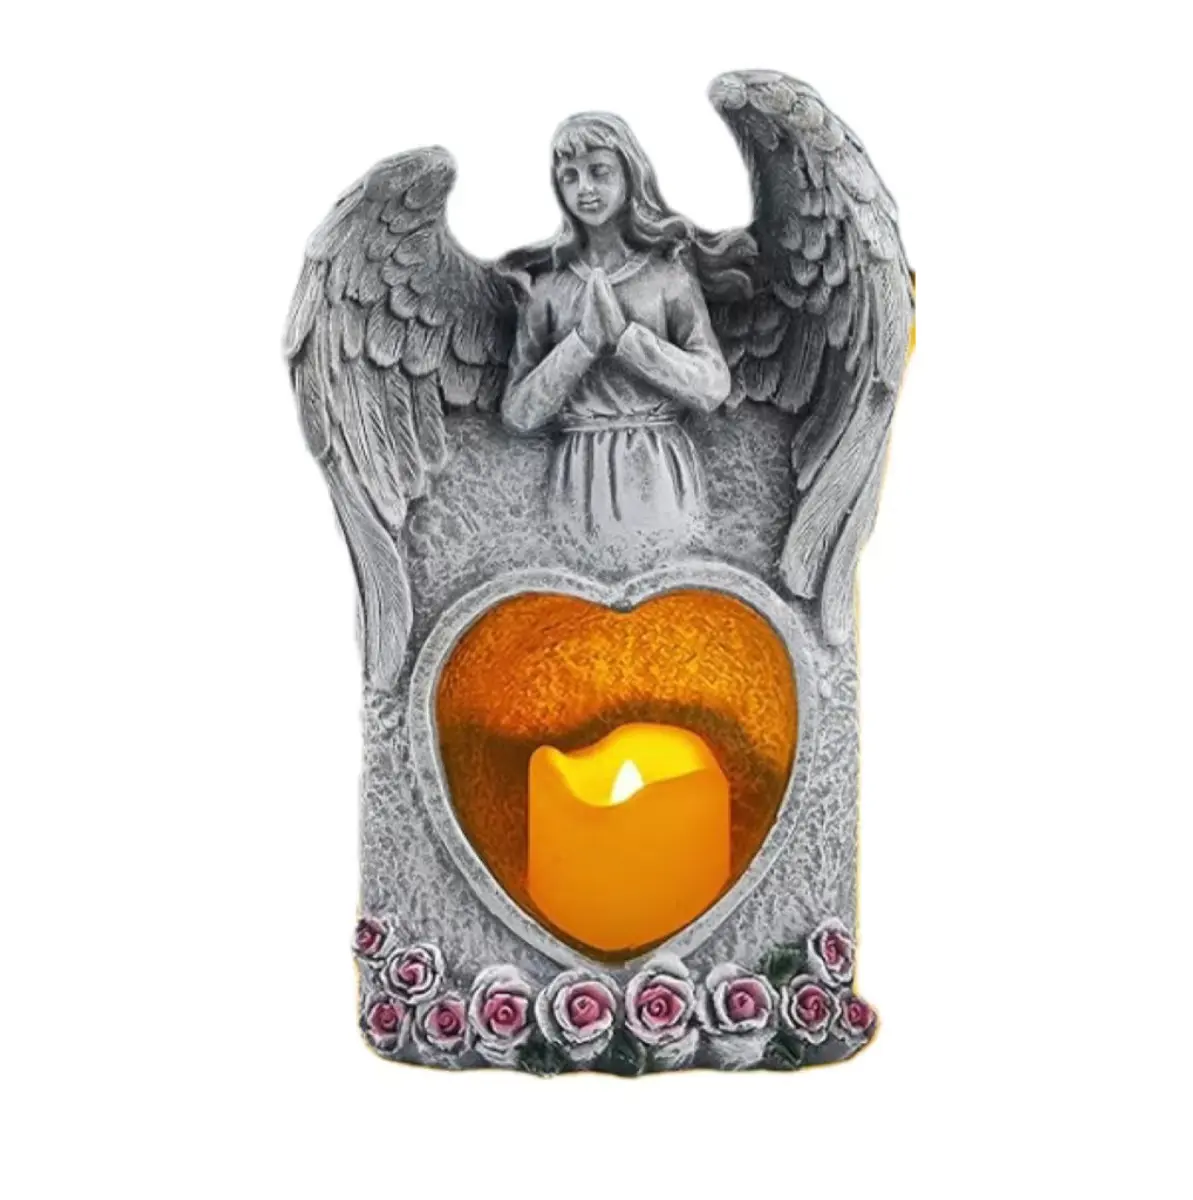 Resin solar prayer Angel statue with flameless candle light garden statue